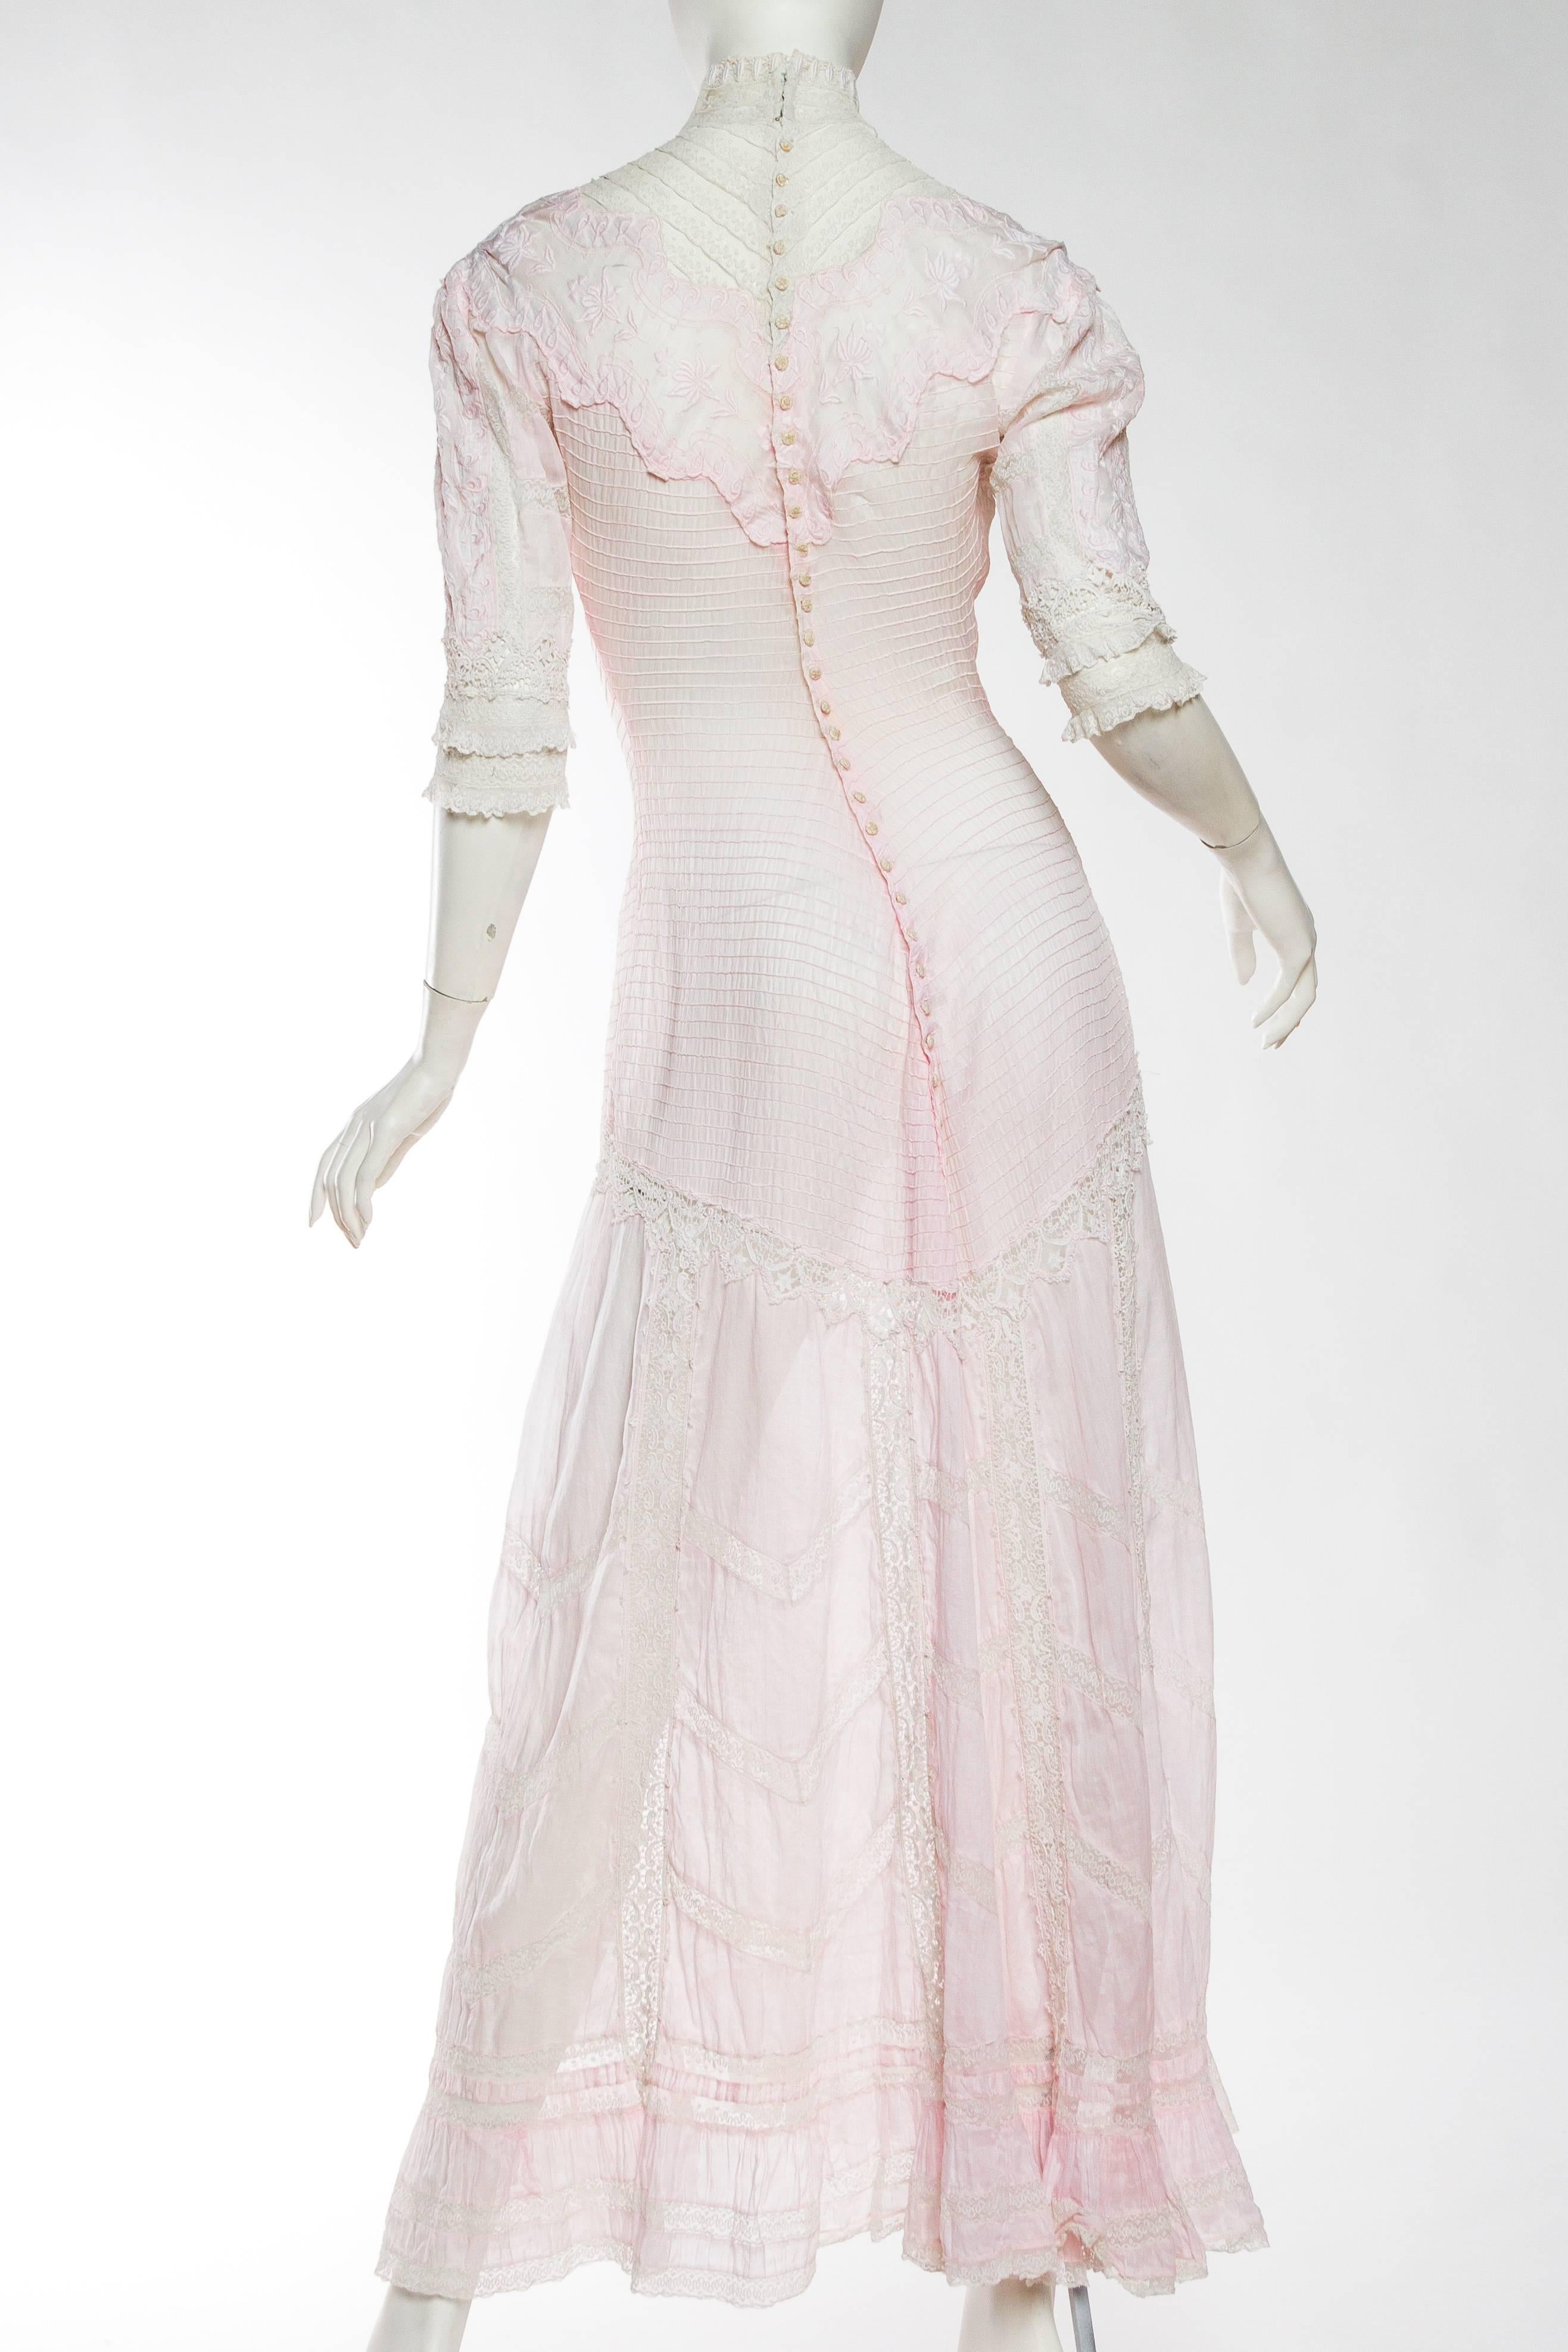 Gray Beautiful and Very Rare Swan Neck Victorian Tea Dress